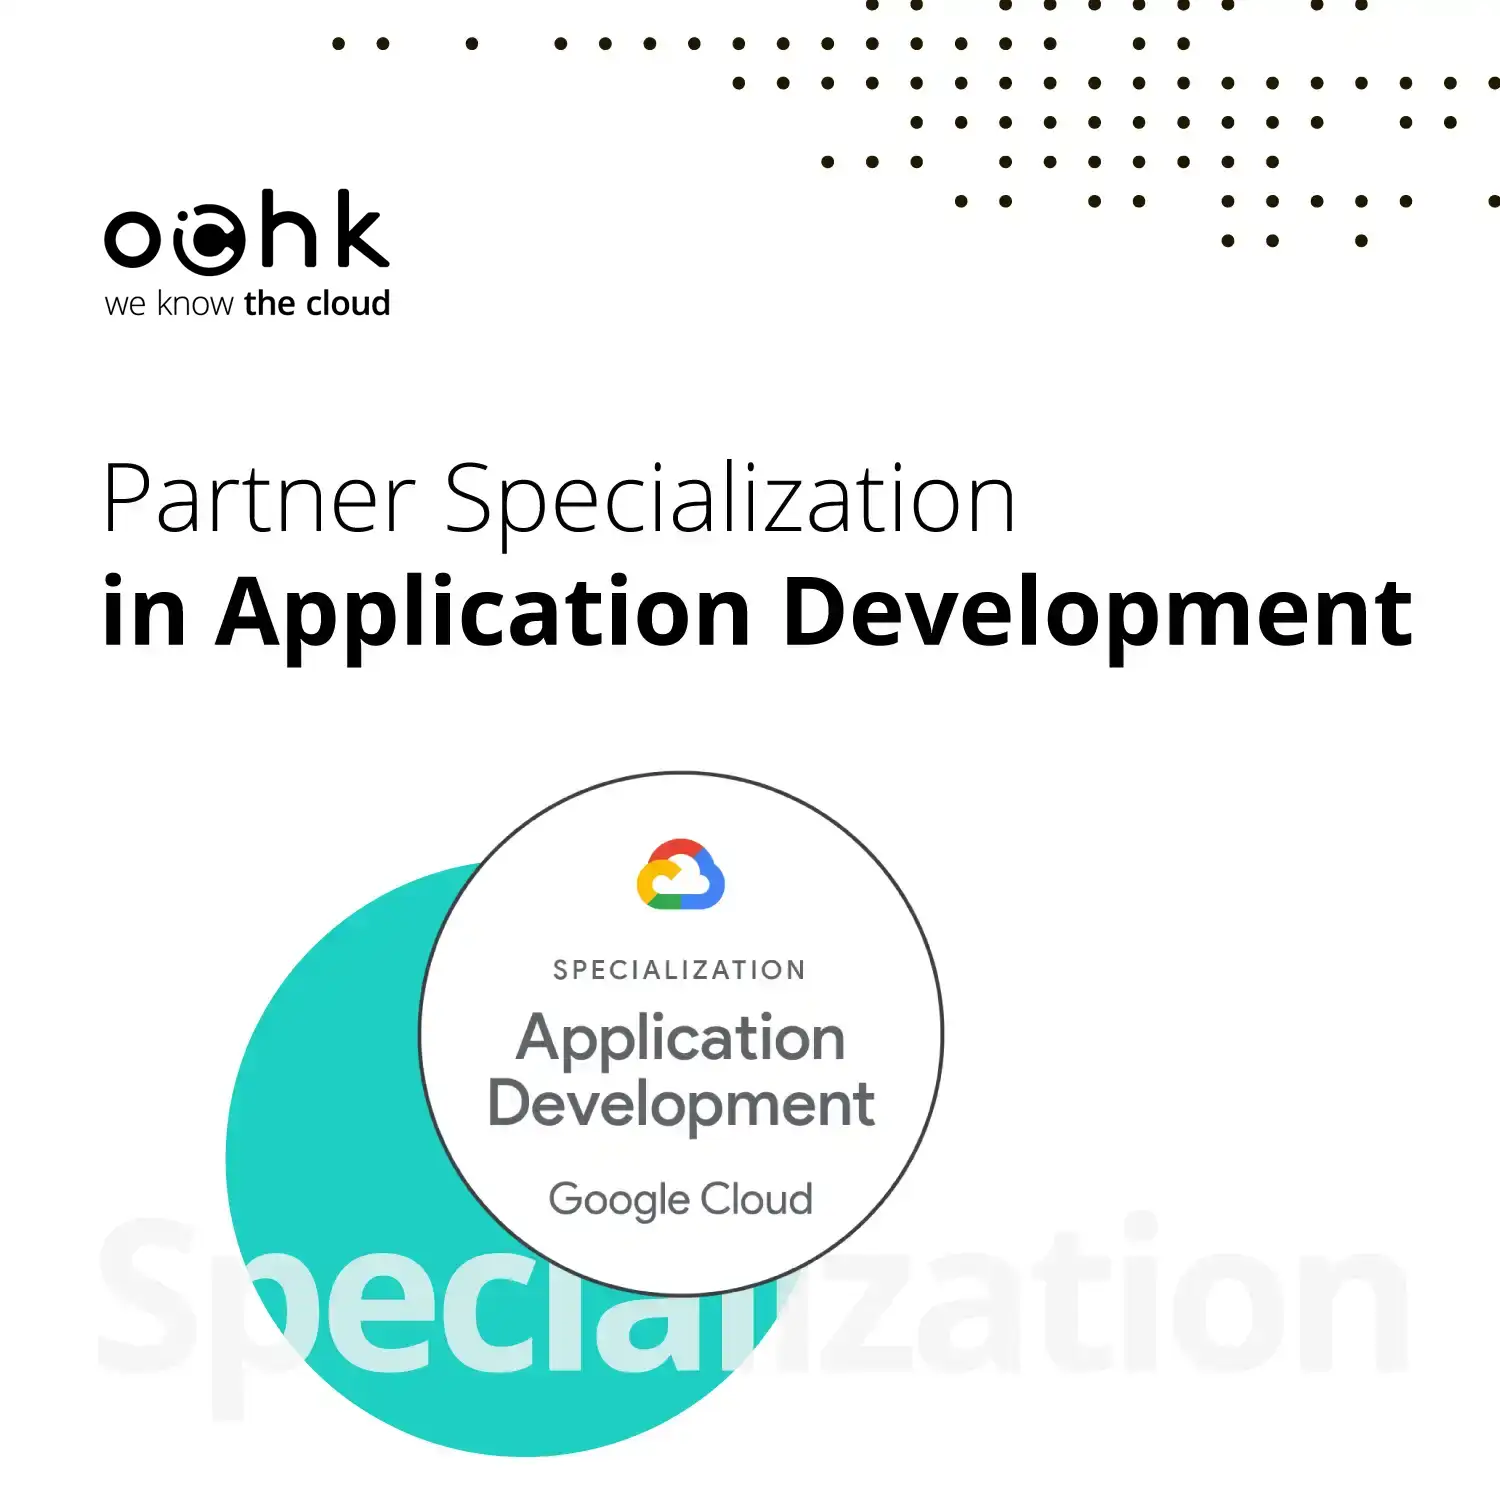 OChK with Application Development Specialization from Google